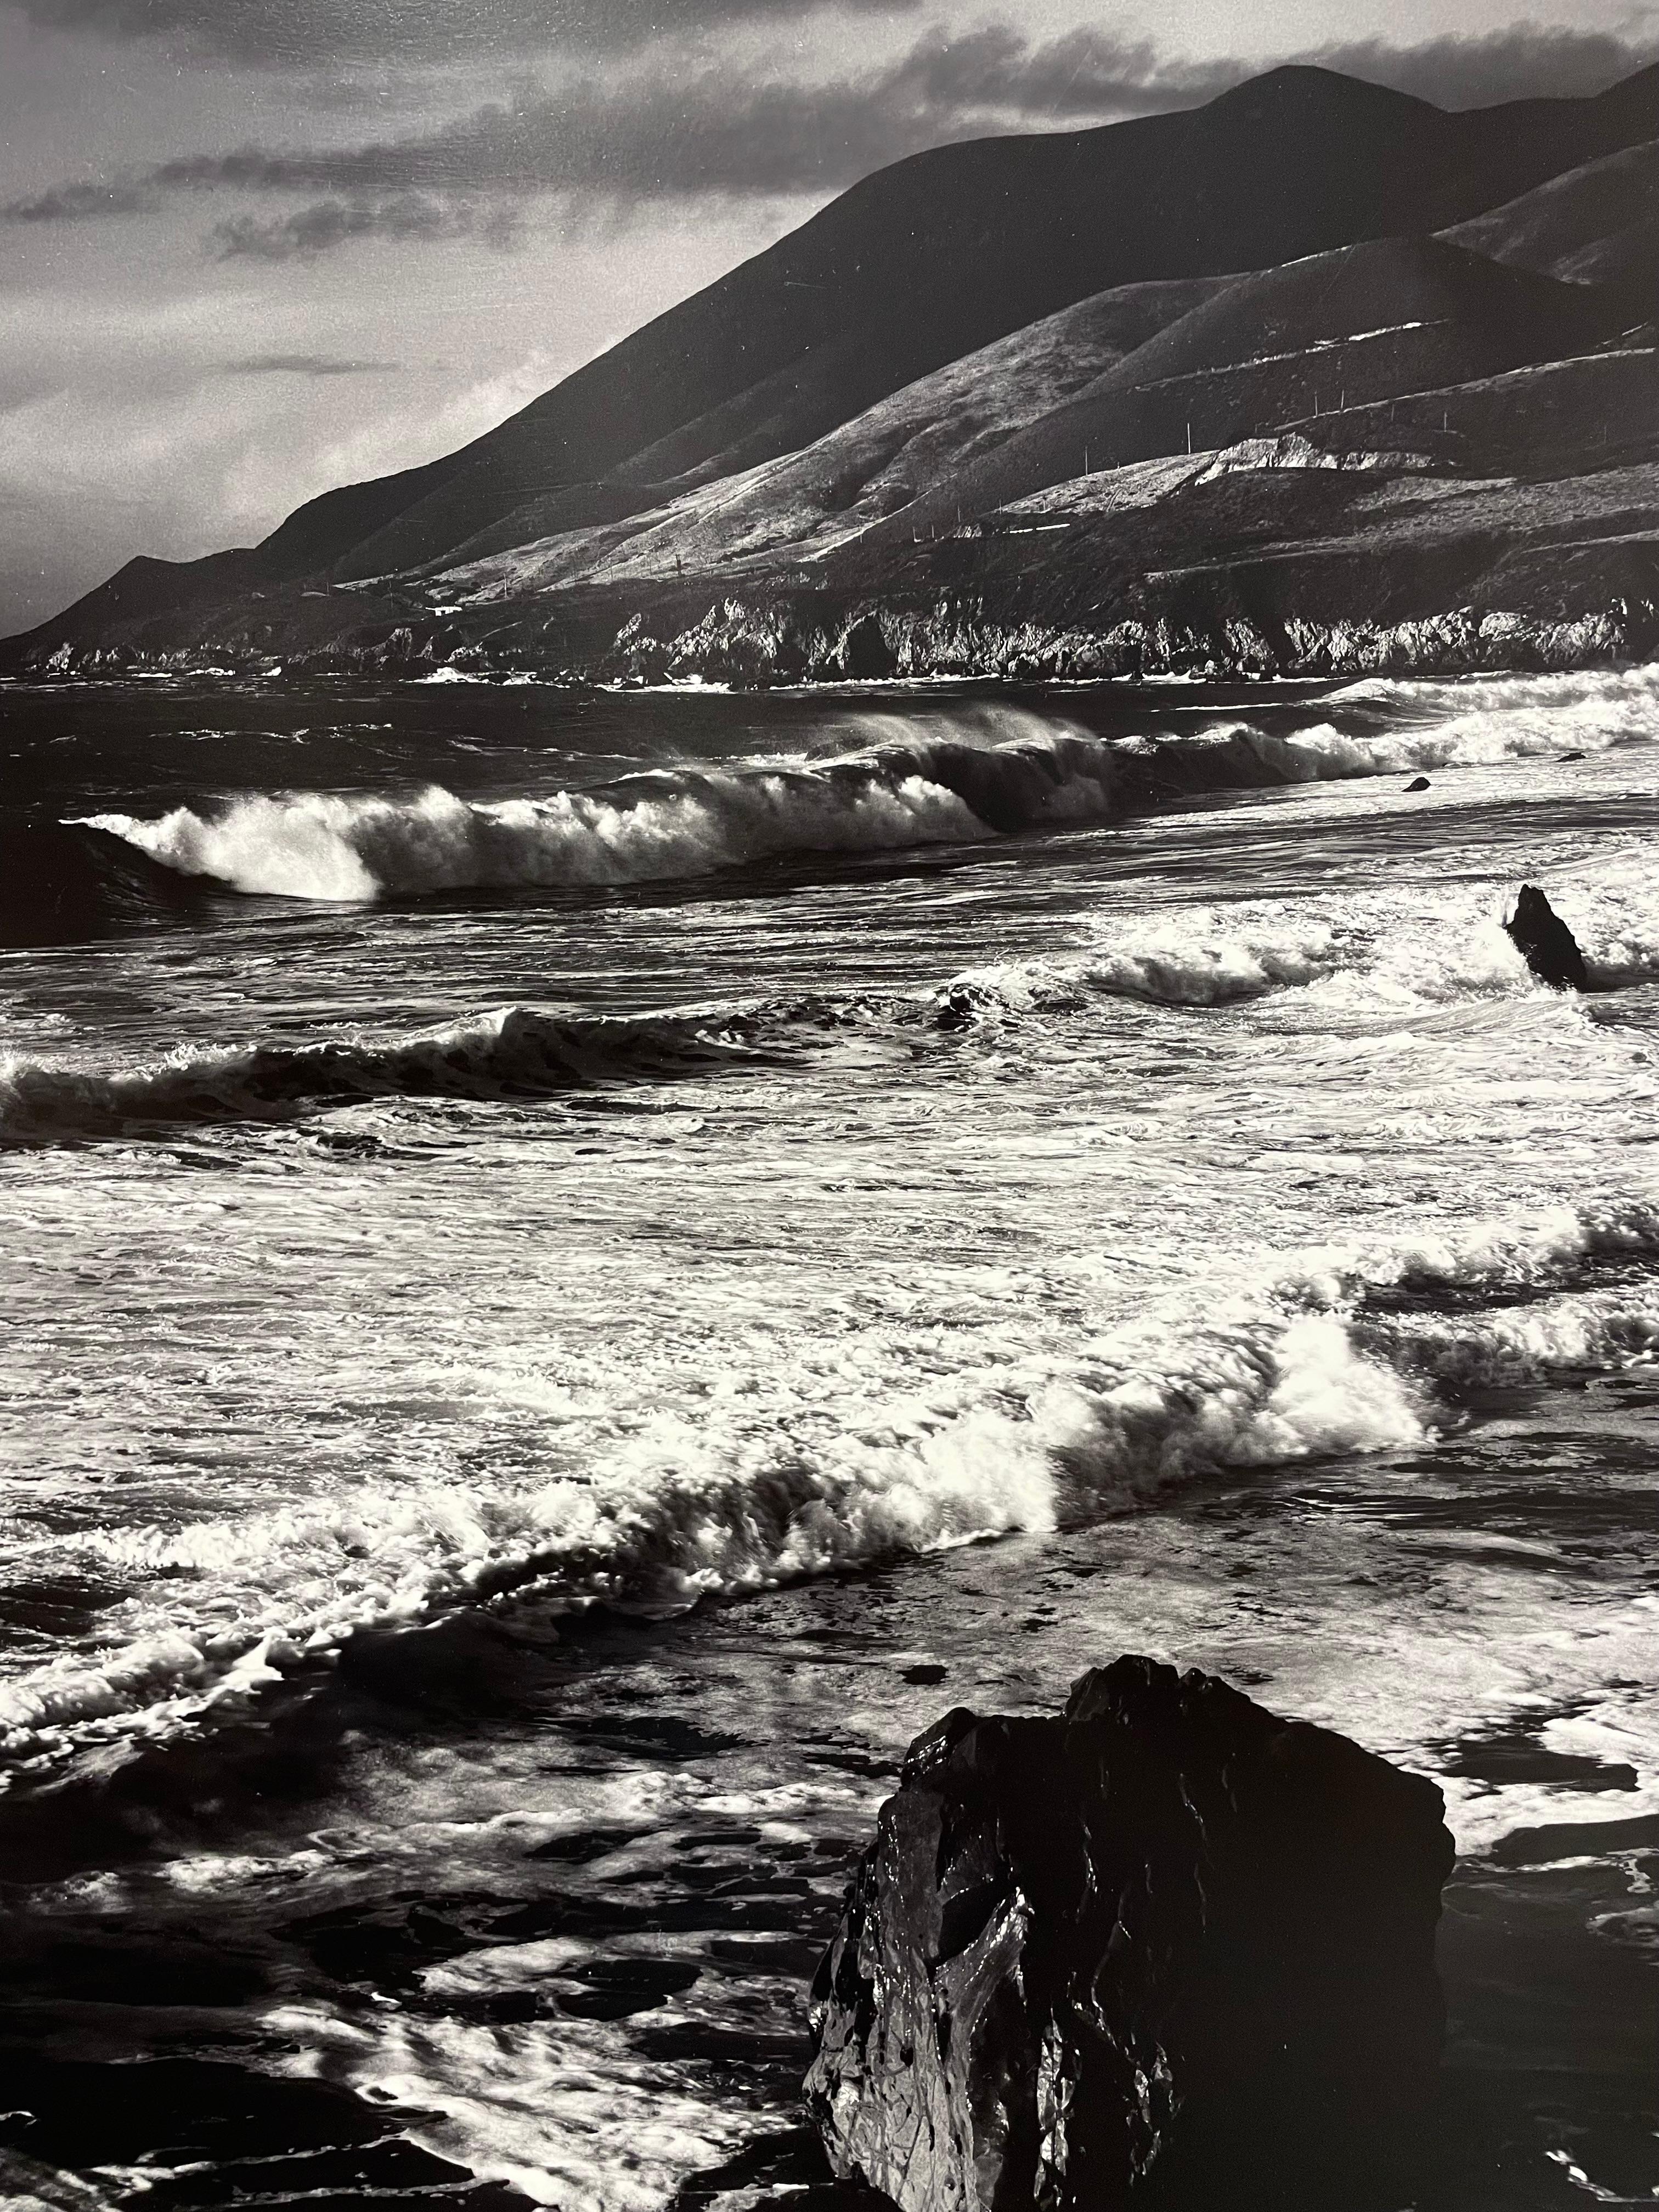 Winter Surf, Garrapata, Sur Coast, 1966 - Black Landscape Photograph by Morley Baer